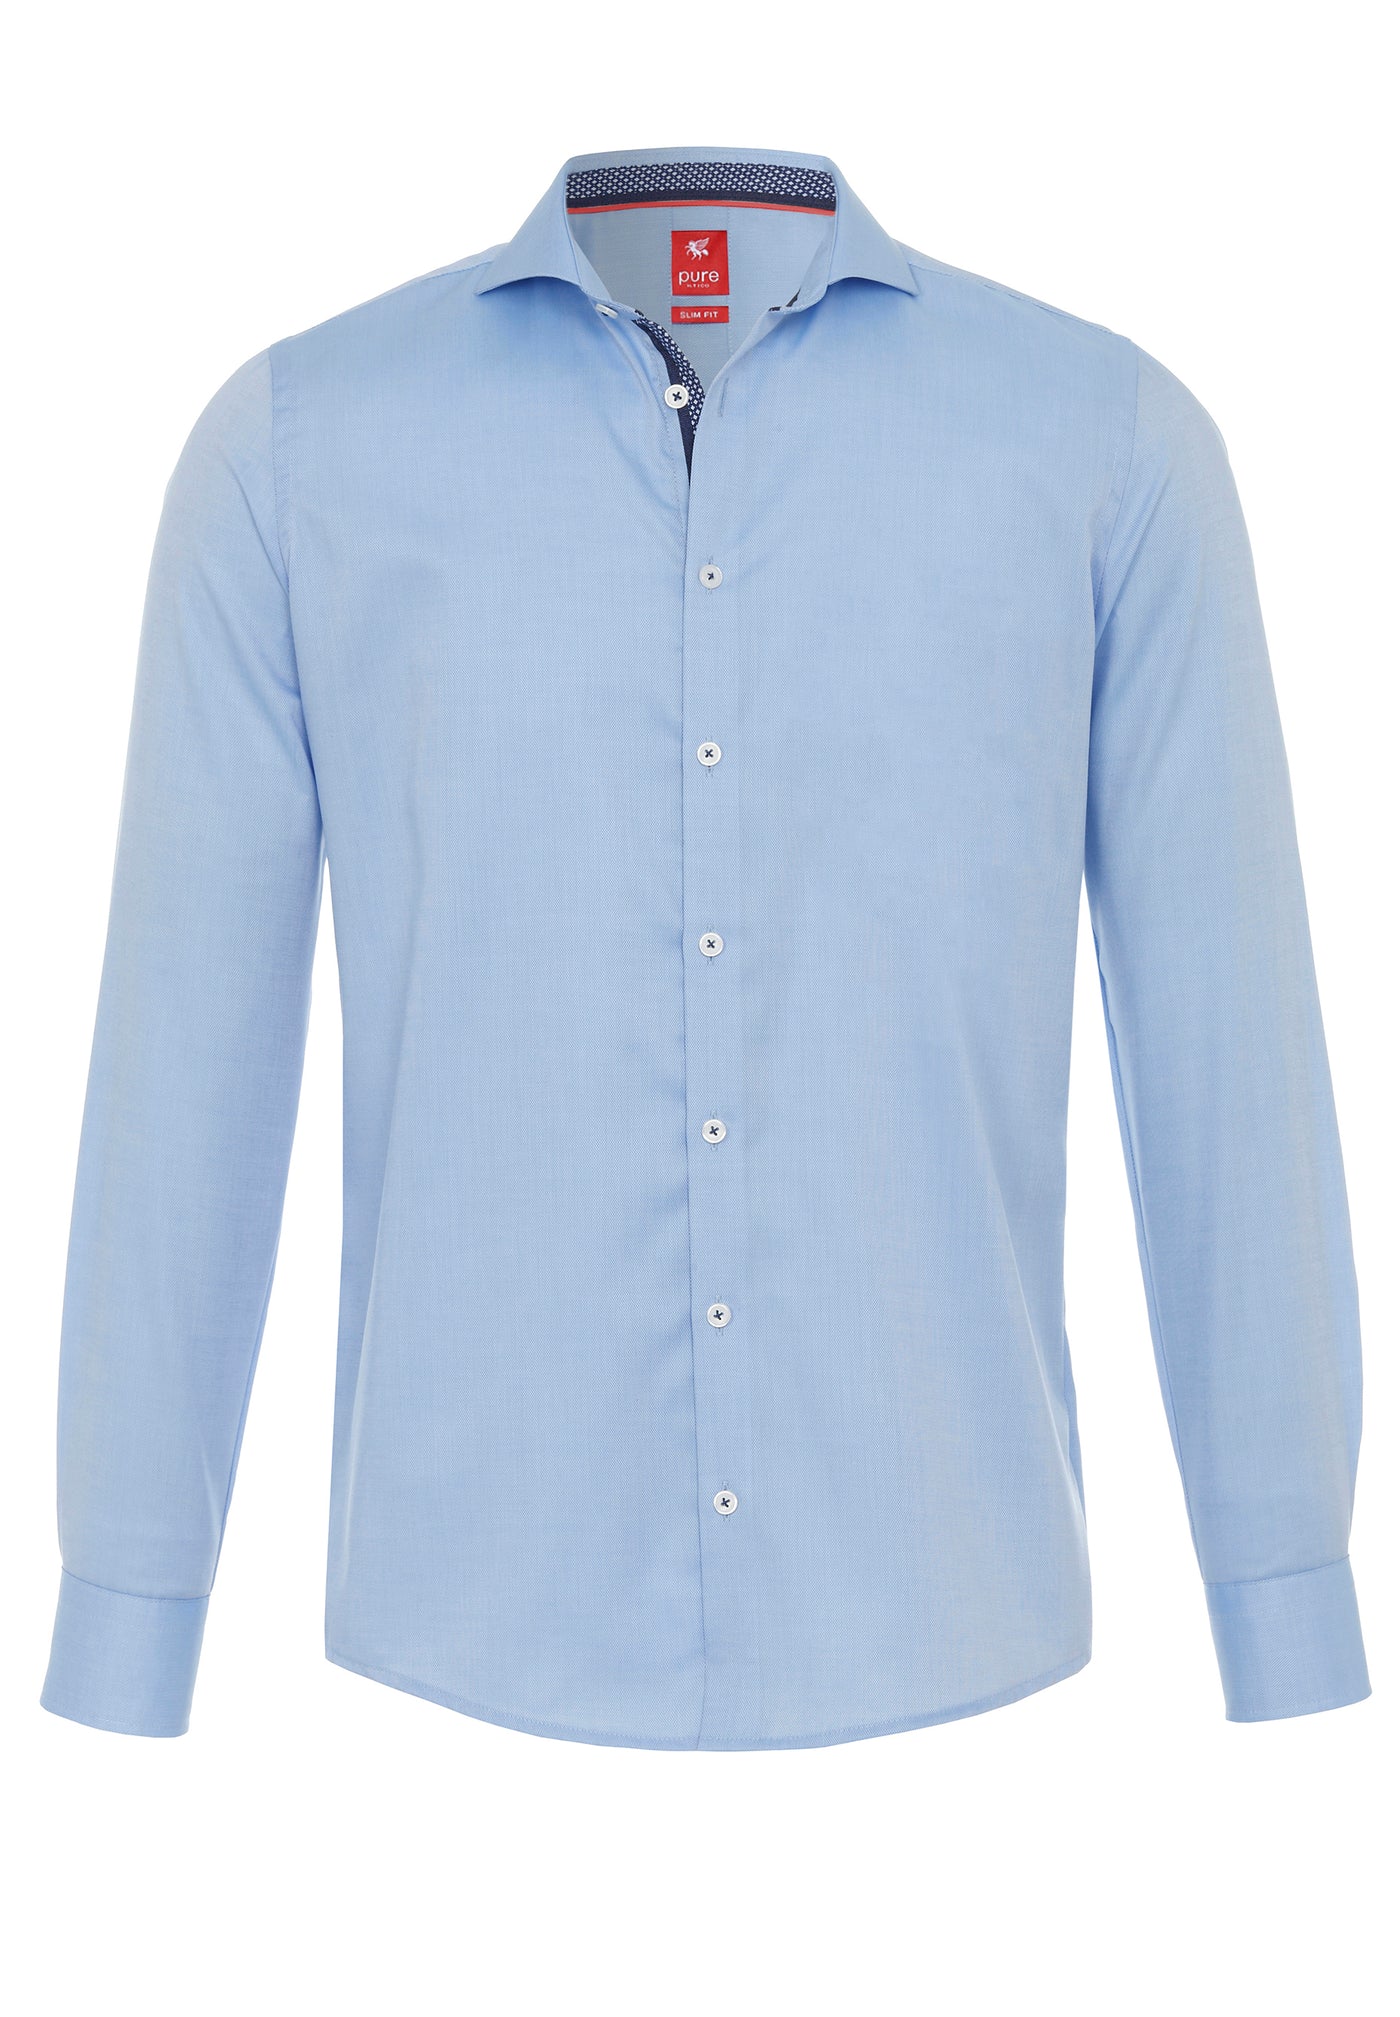 4020-718 - City Shirt Slim Fit - blue